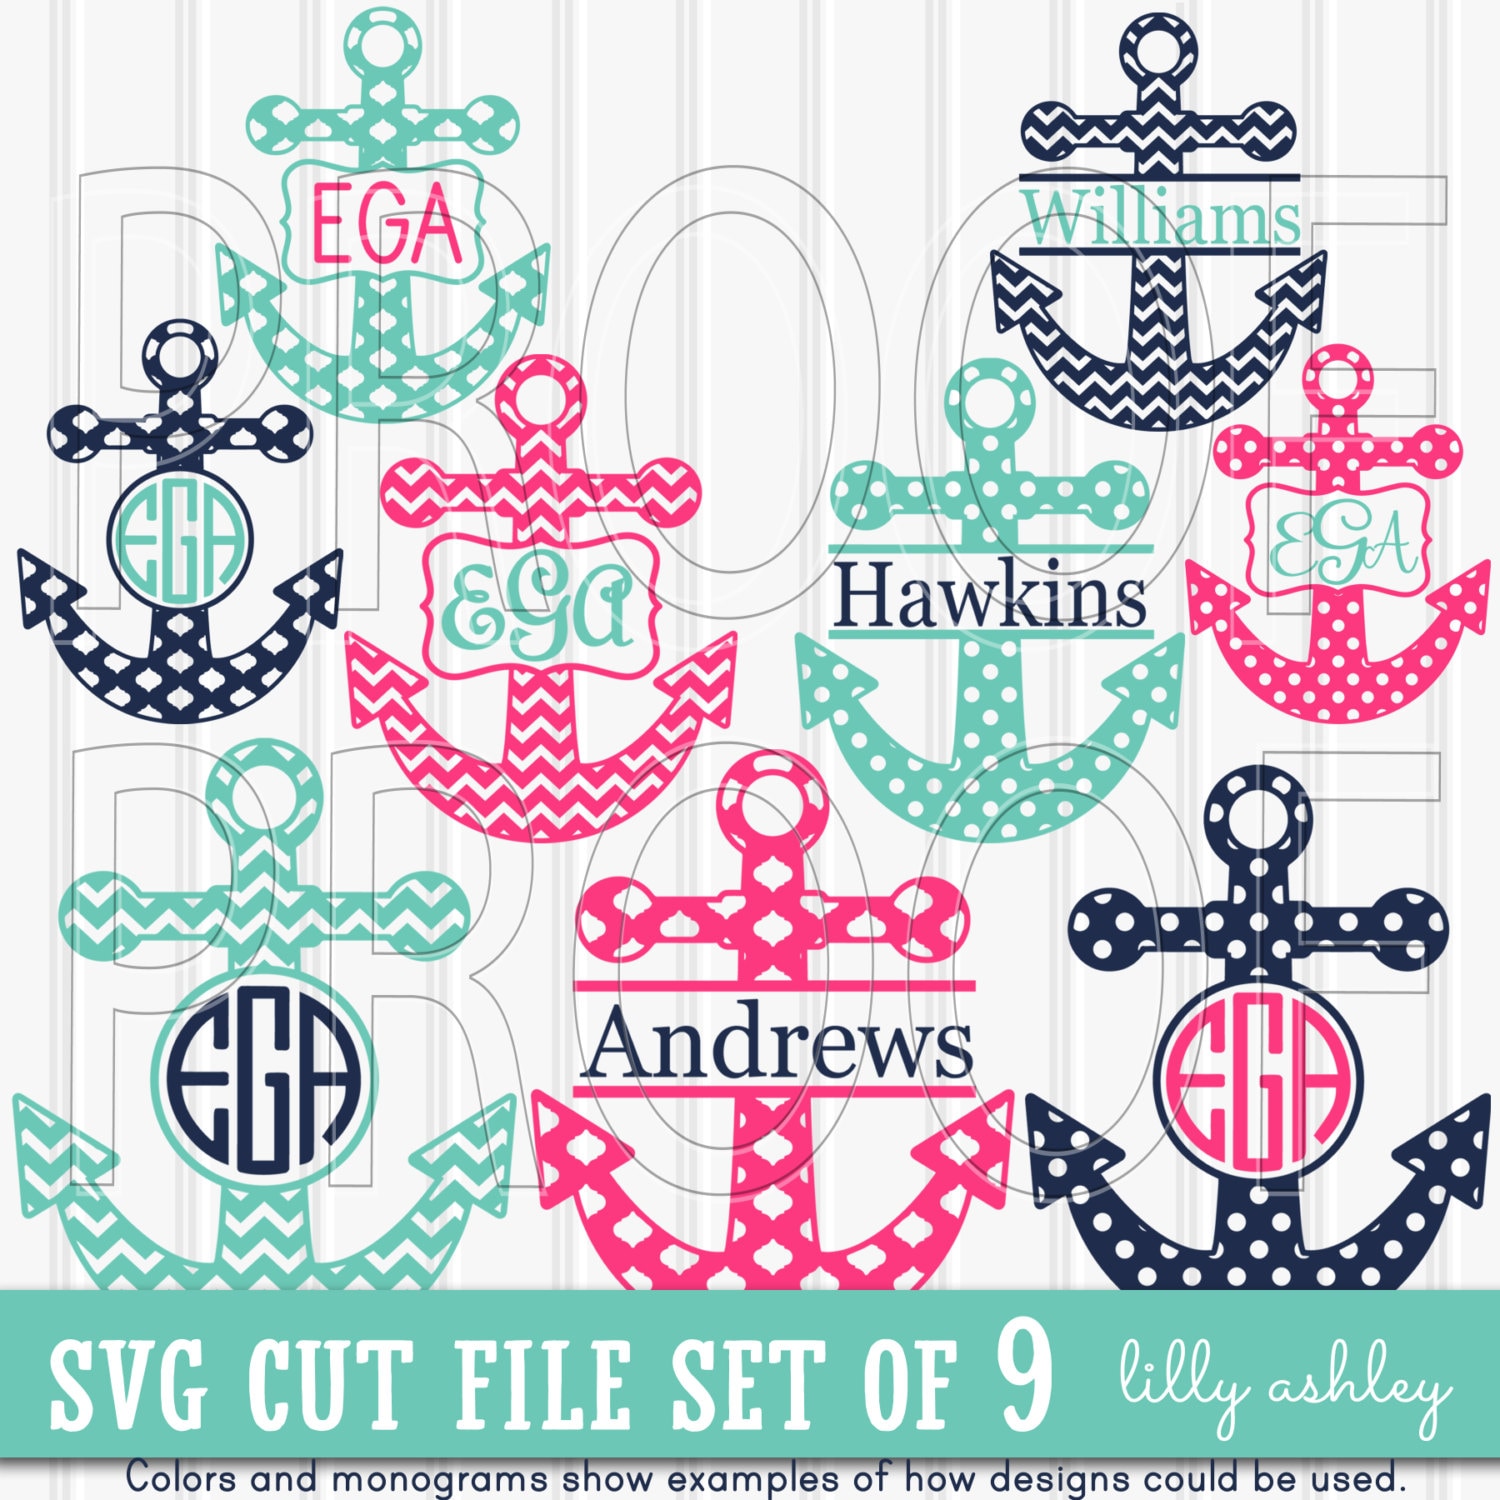 Download Monogram SVG Files Set includes 9 cutting files SVG/JPG